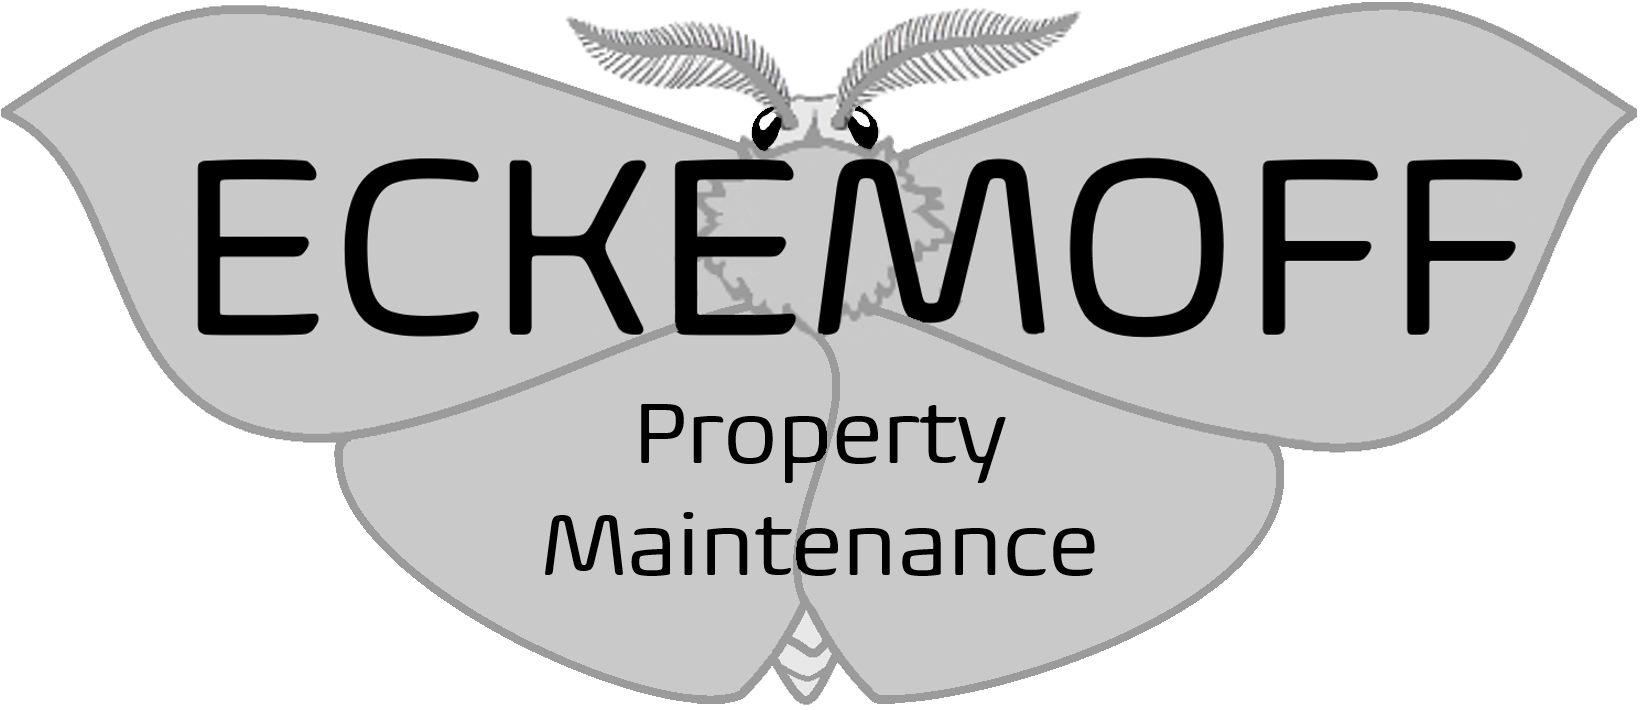 Eckemoff Property Maintenance Logo